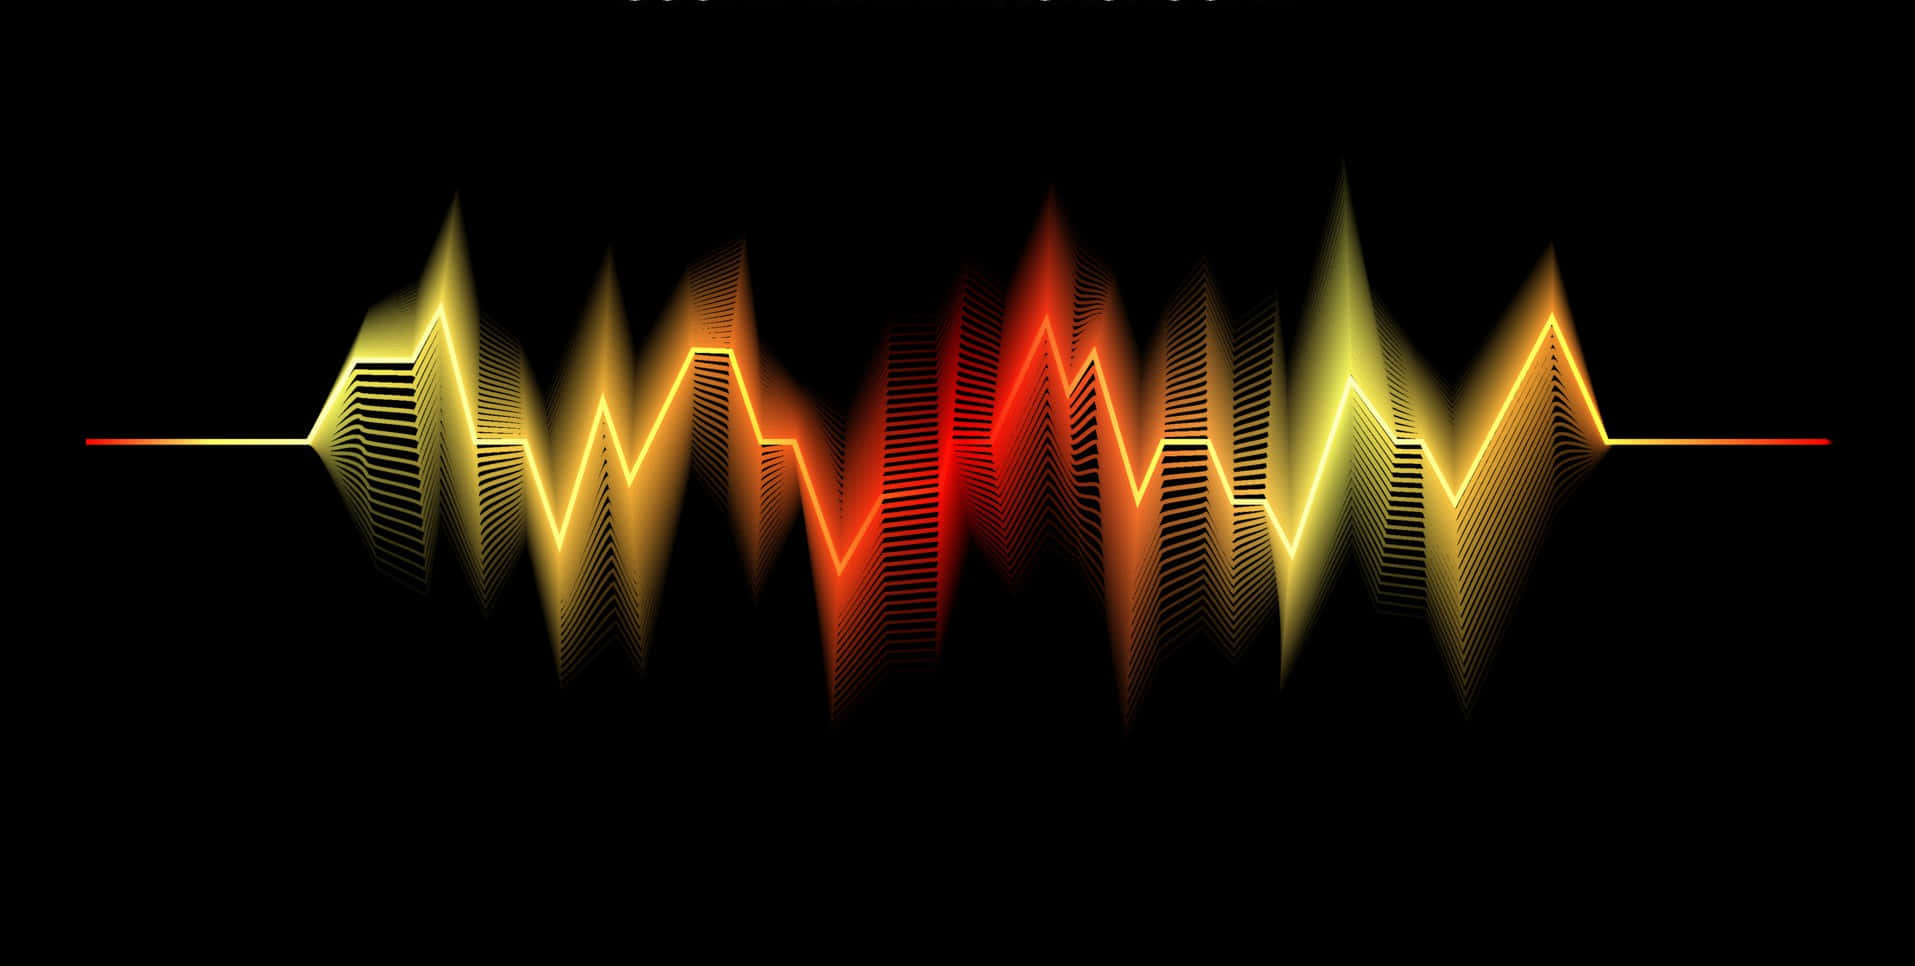 wavelength spectrum wallpaper